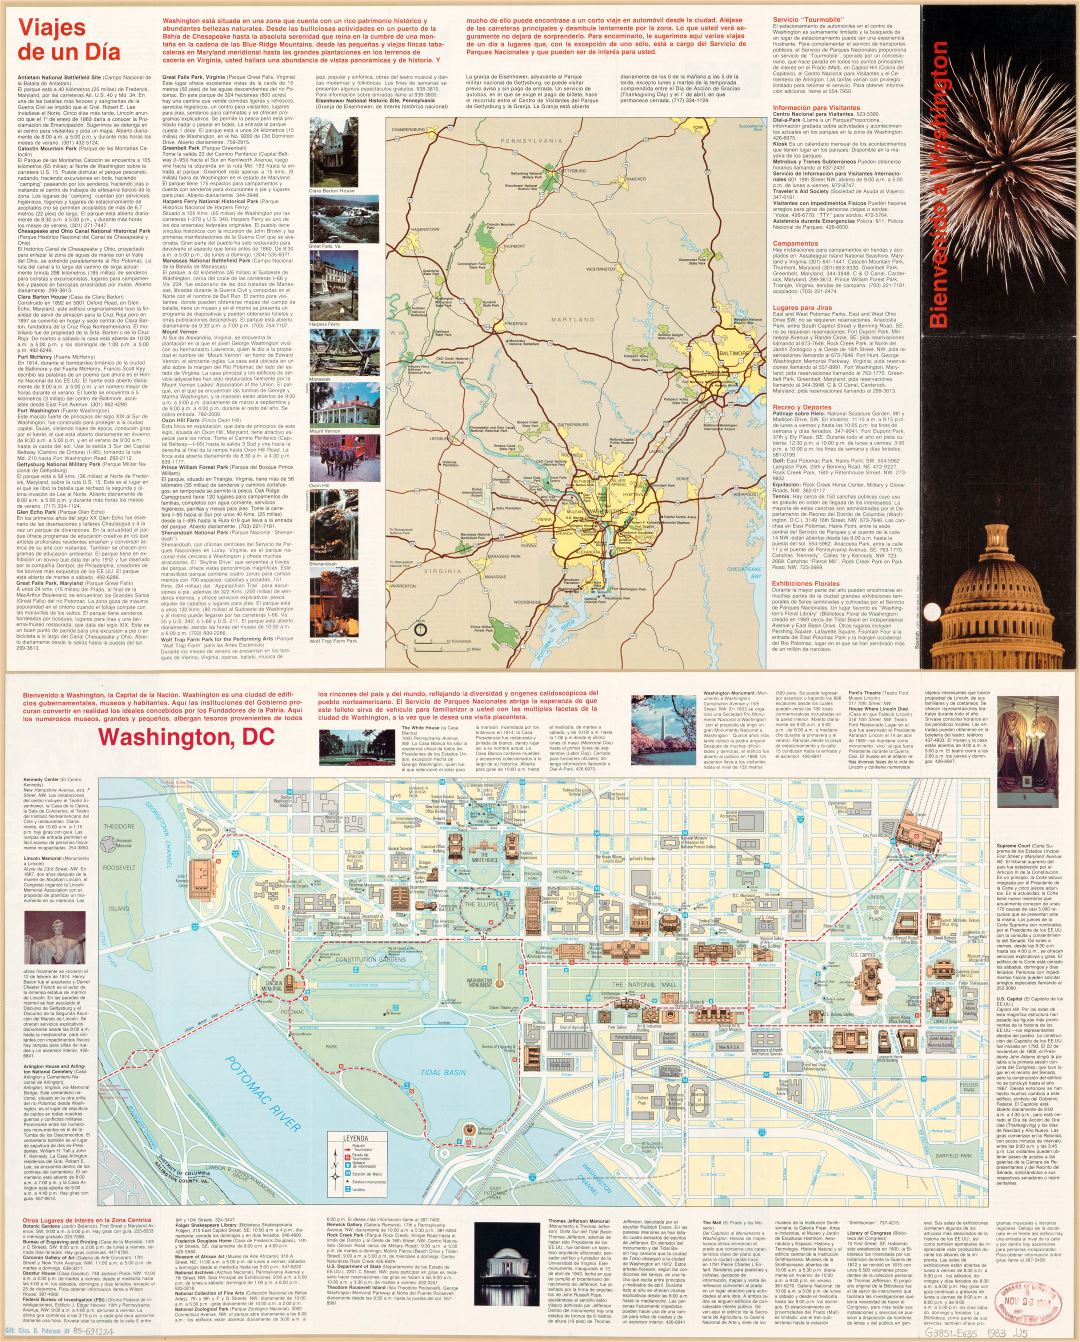 Large scale tourist map of Washington D.C. - 1983